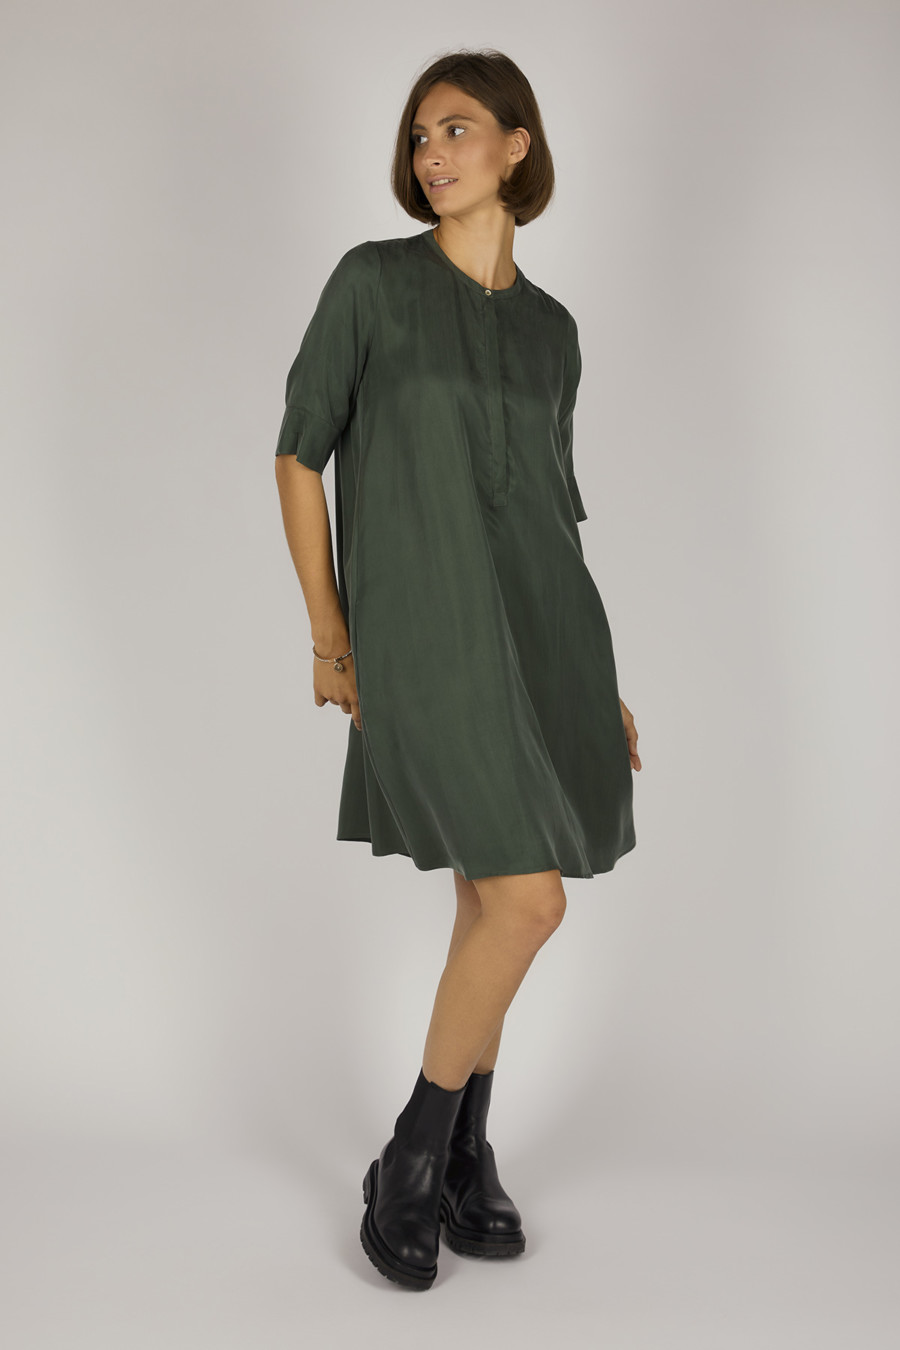 PHOEBE - Midi dress with round neckline - Color: Moss